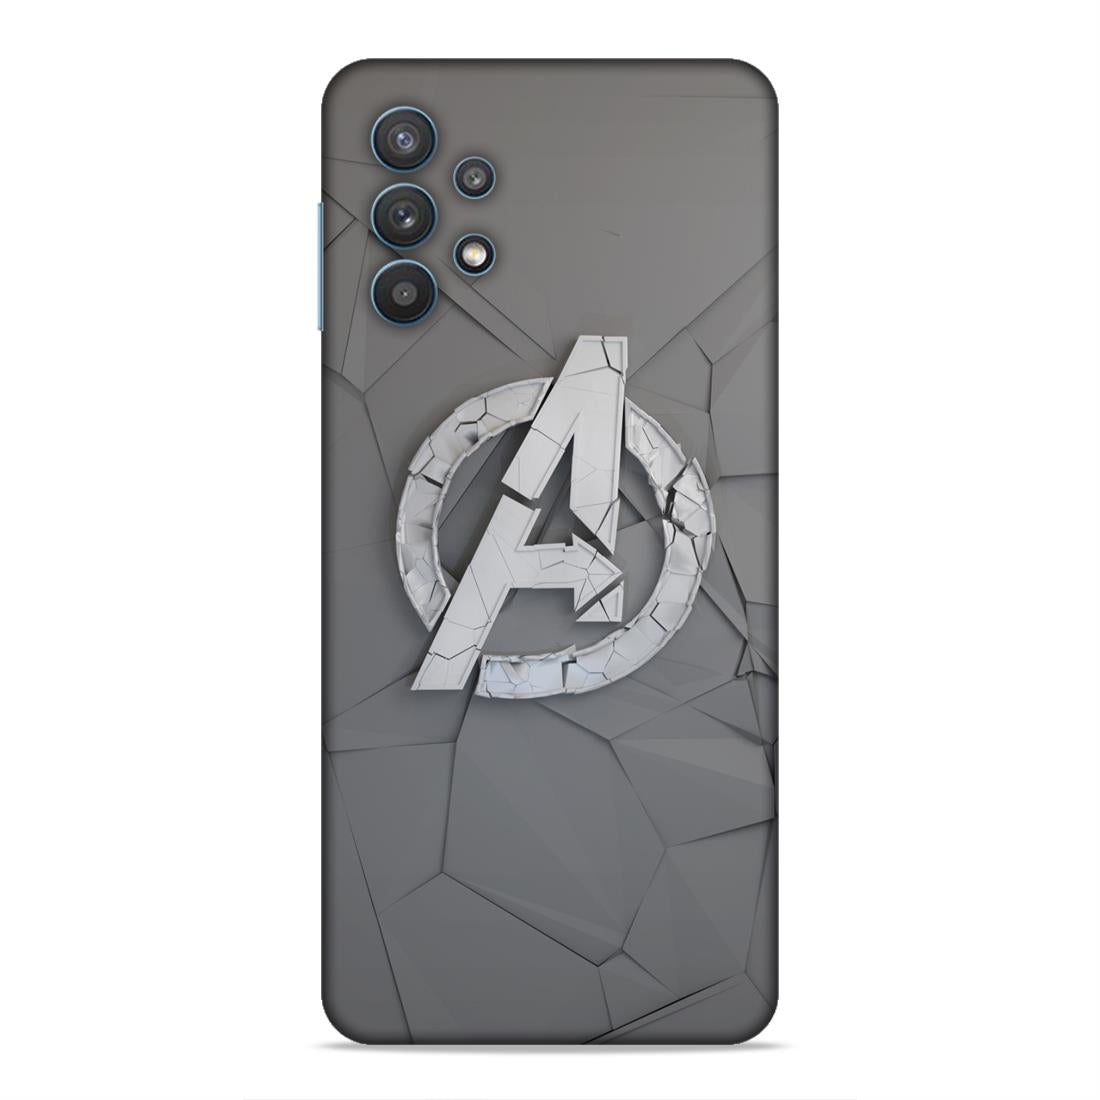 Avengers Symbol Hard Back Case For Samsung Galaxy A32 5G / M32 5G